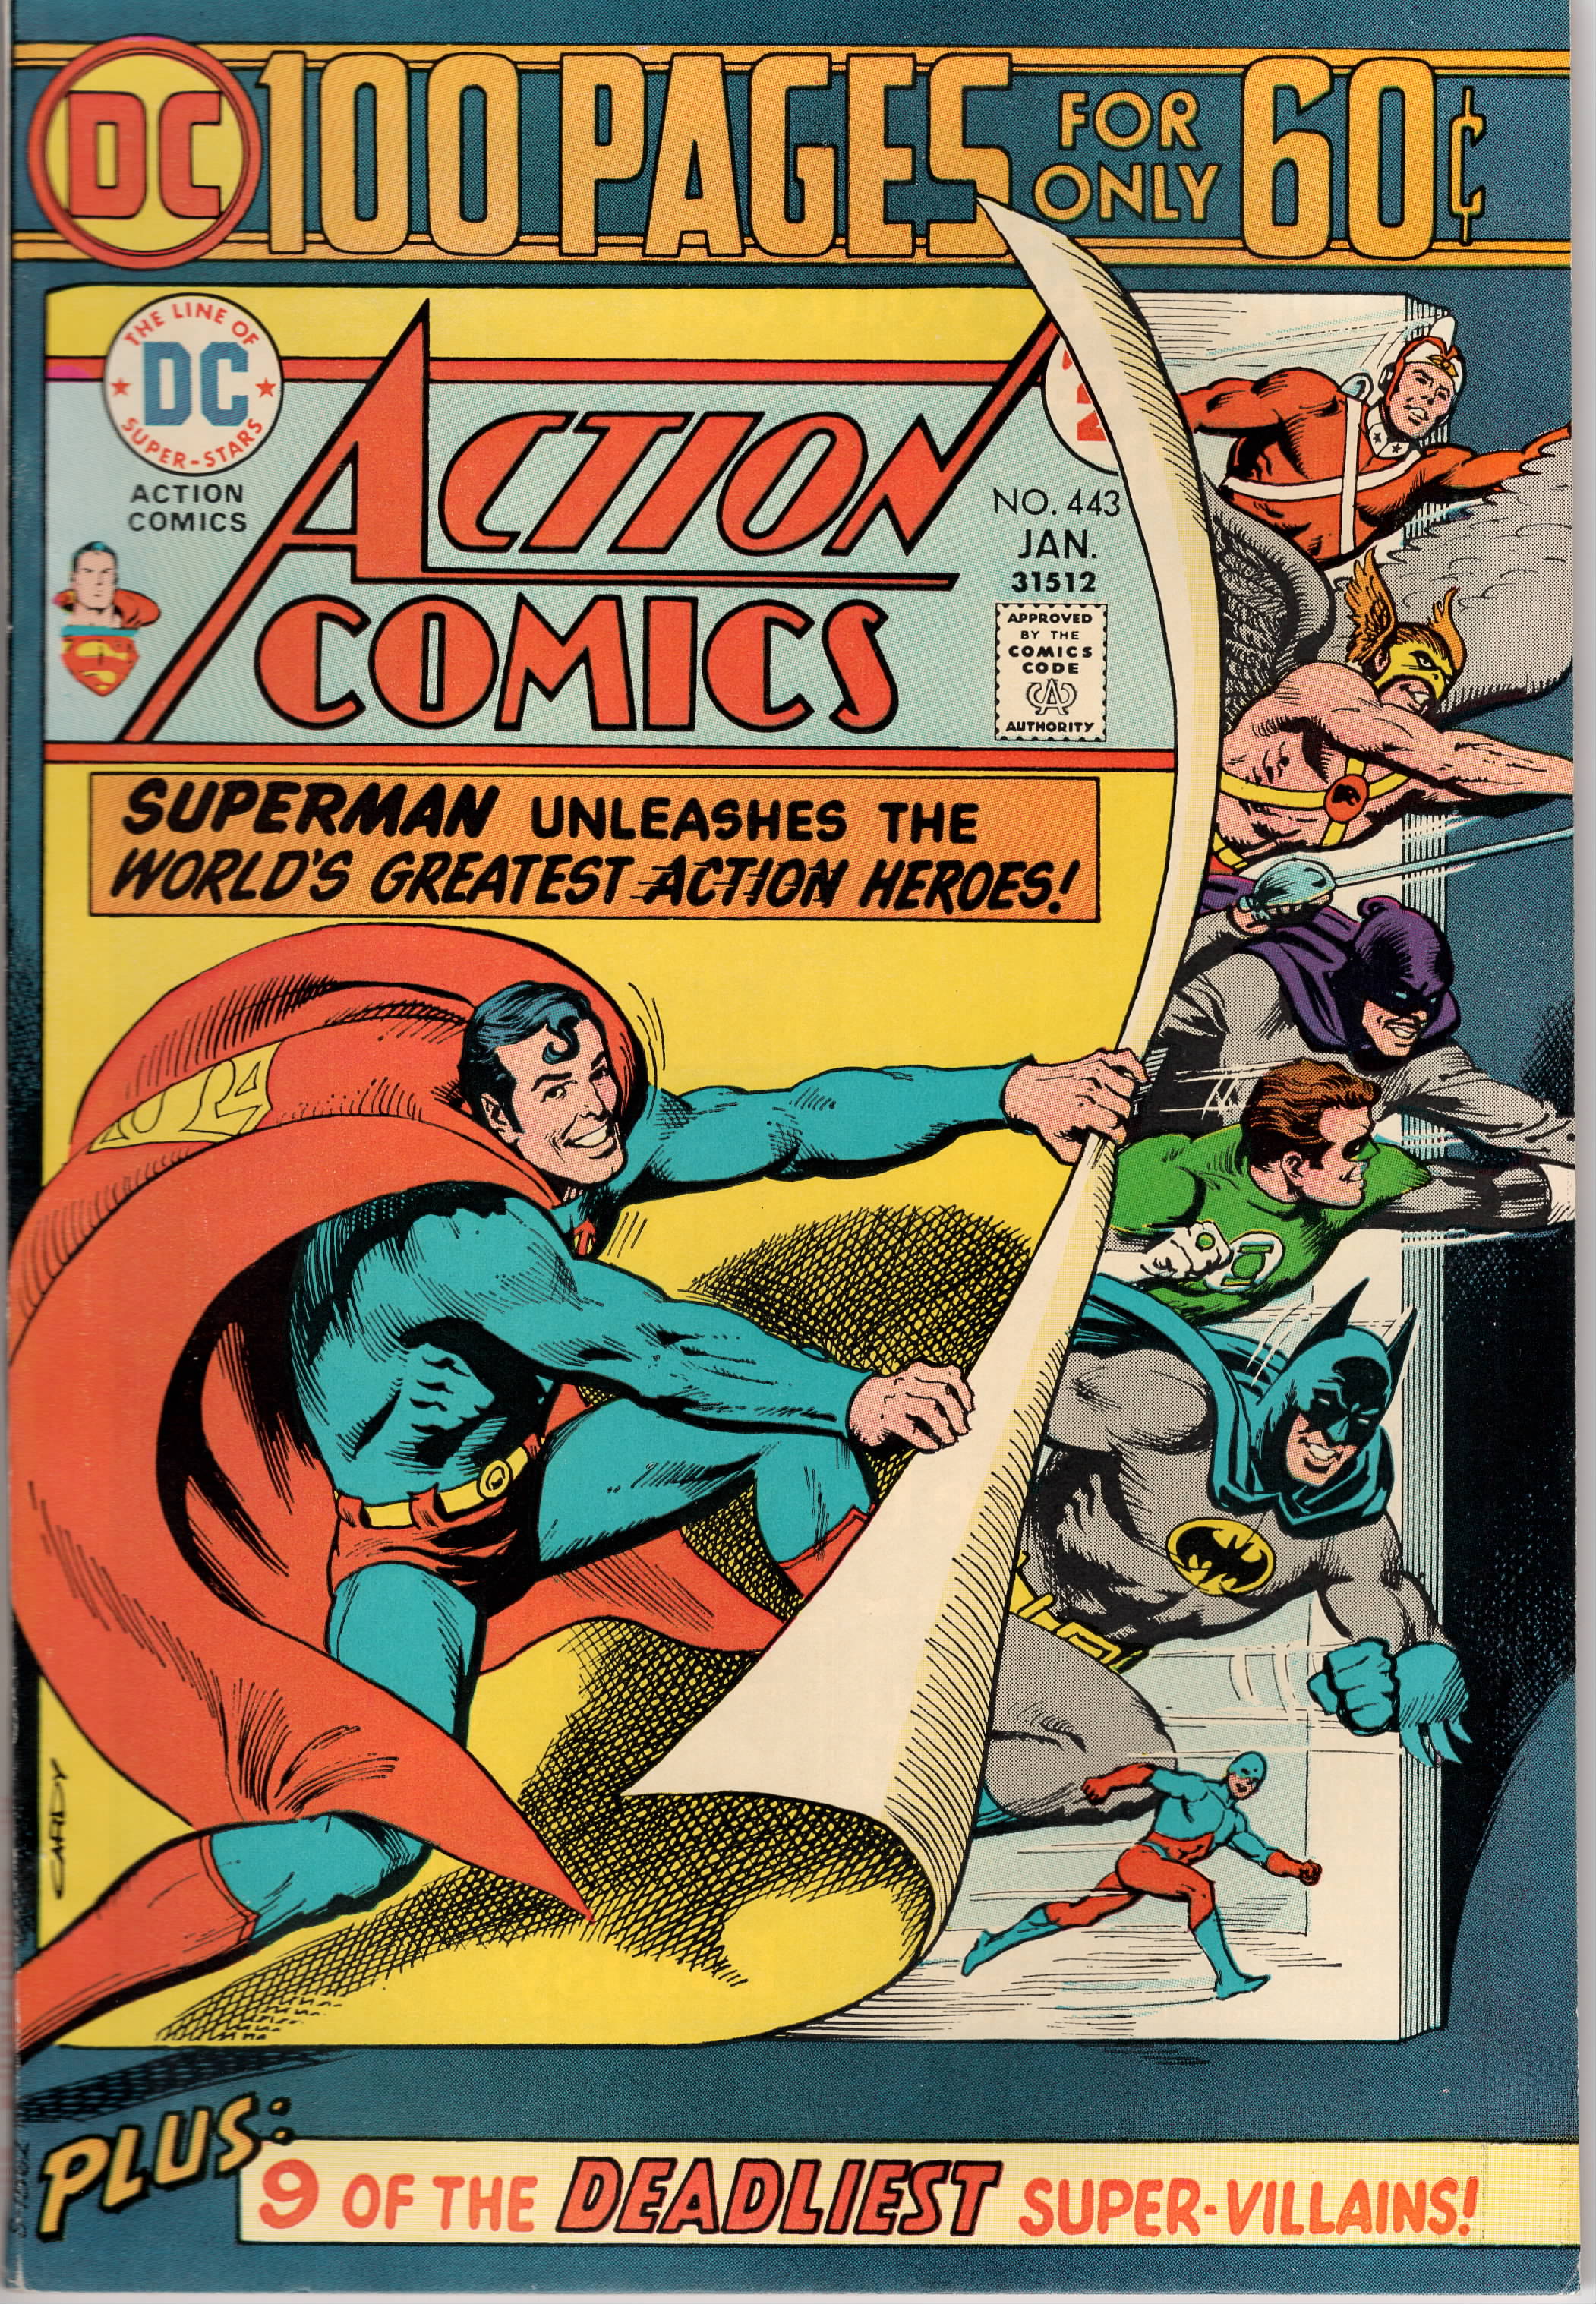 Action Comics #443